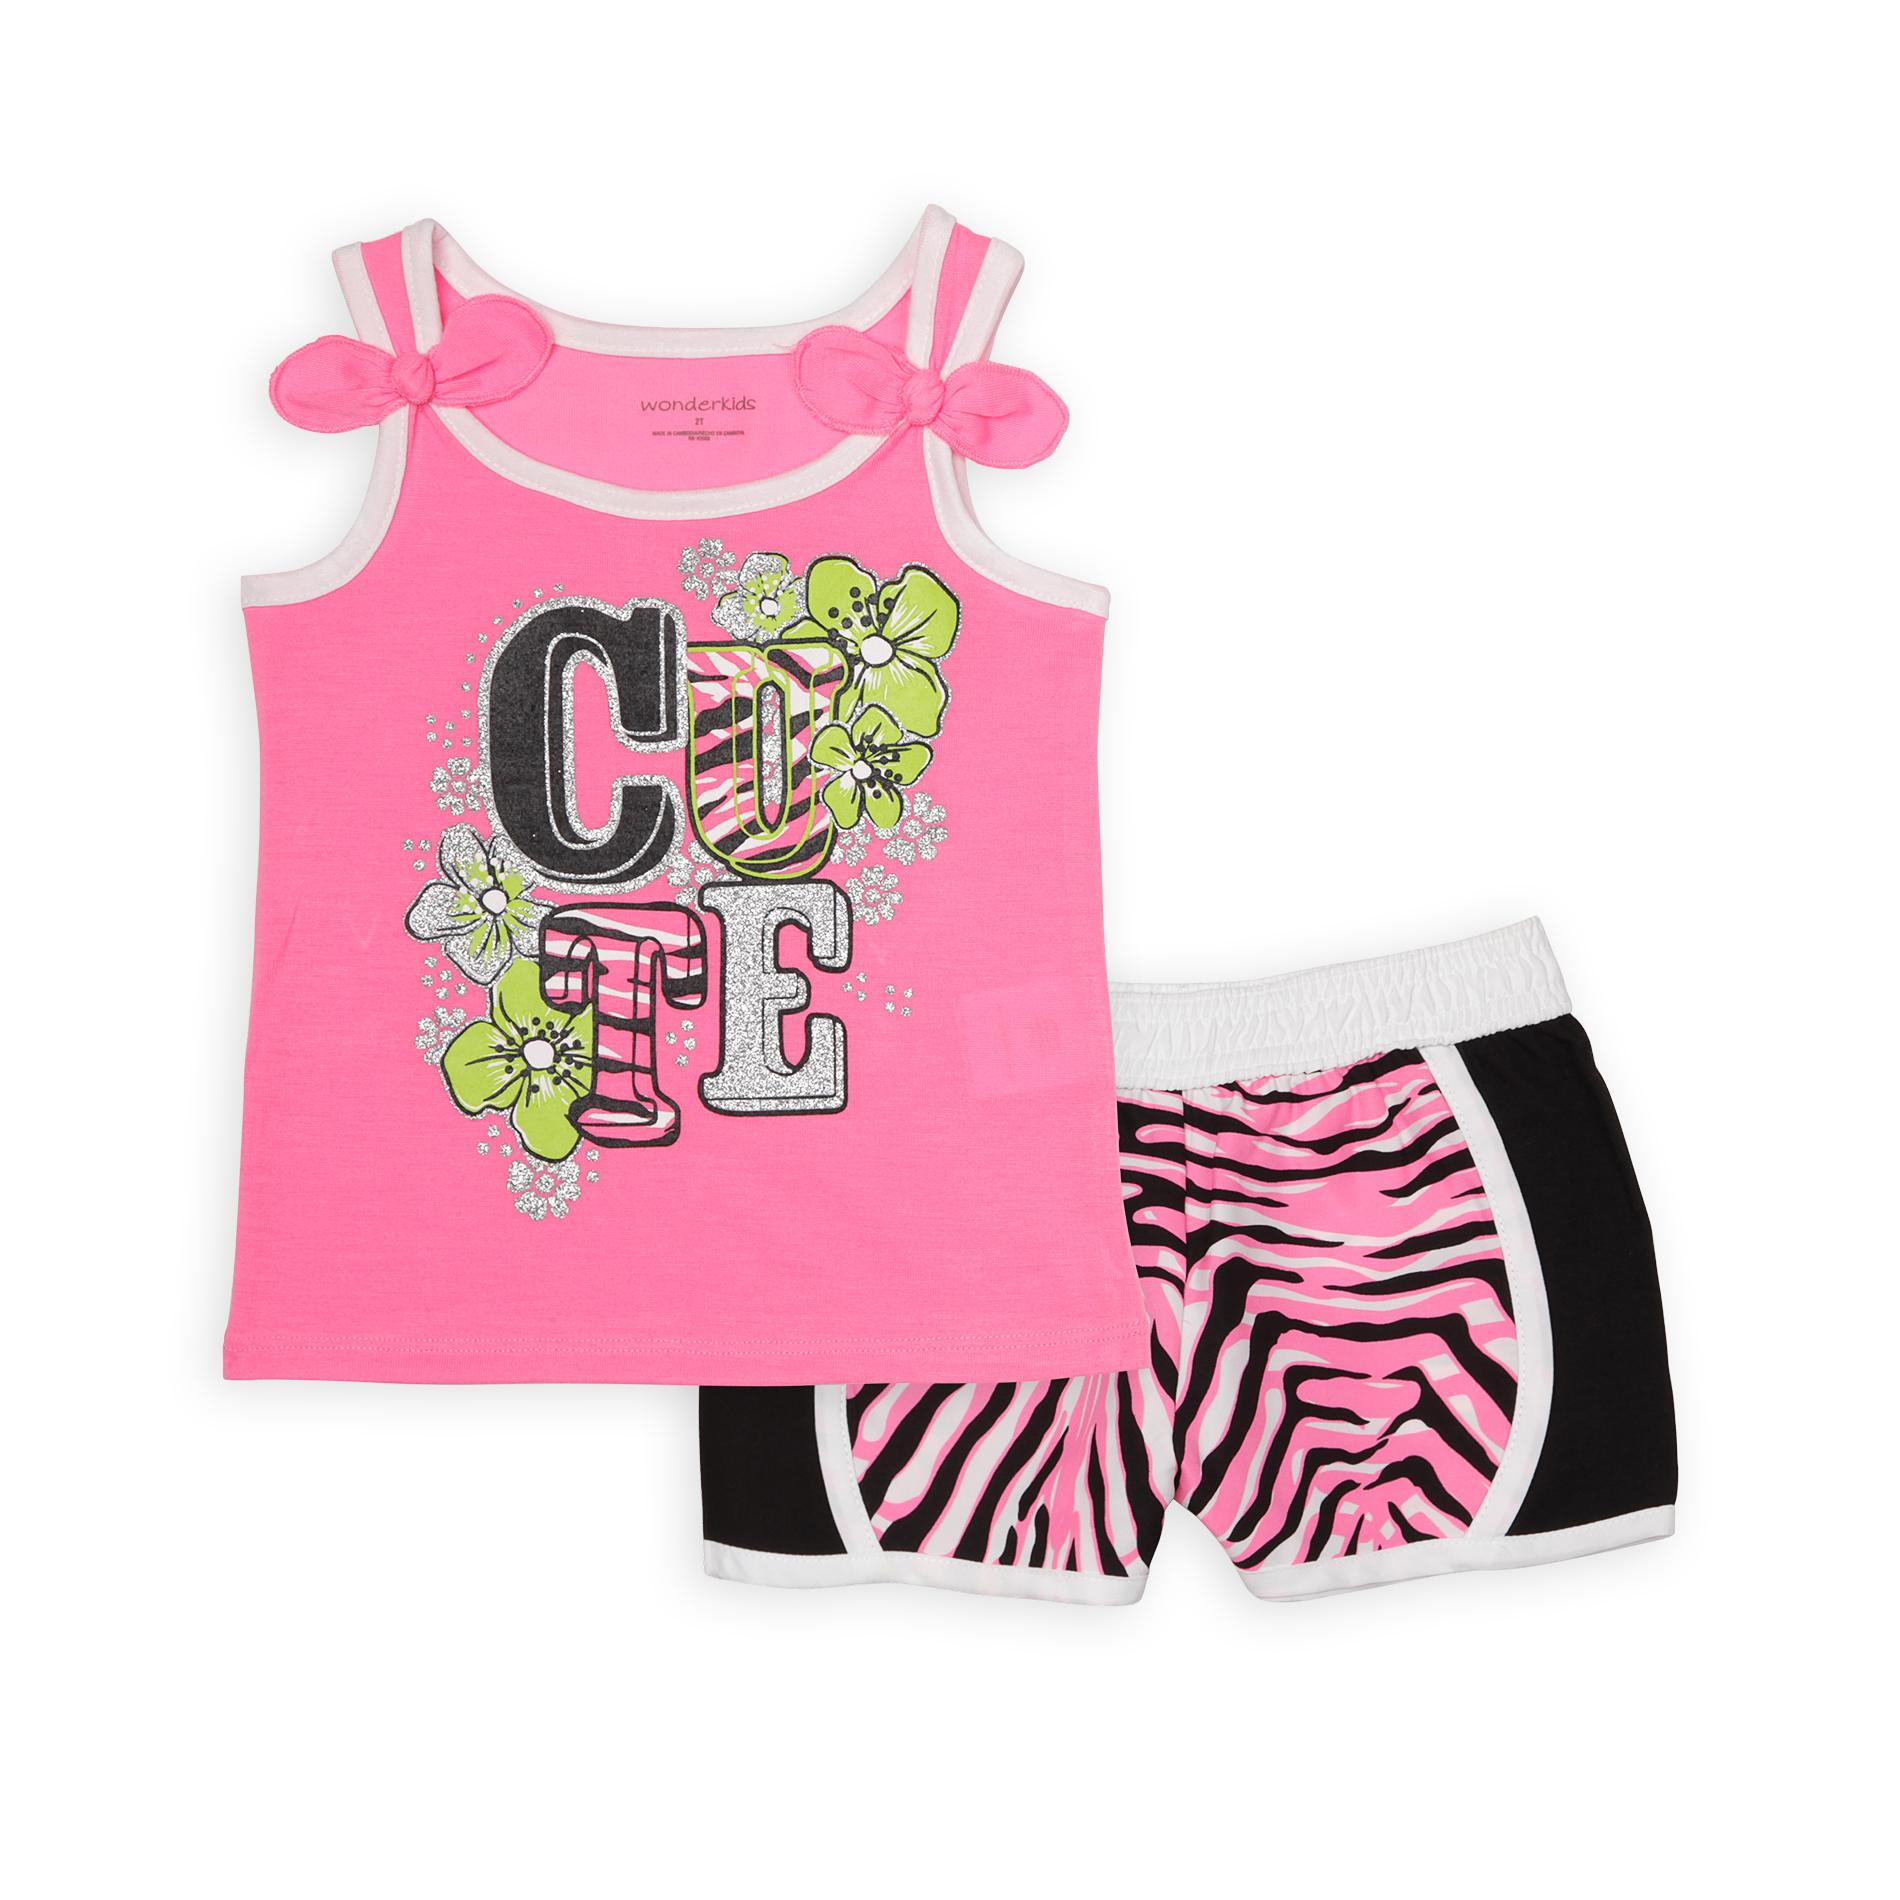 WonderKids Toddler Girl's Tank Top & Shorts - Zebra Print